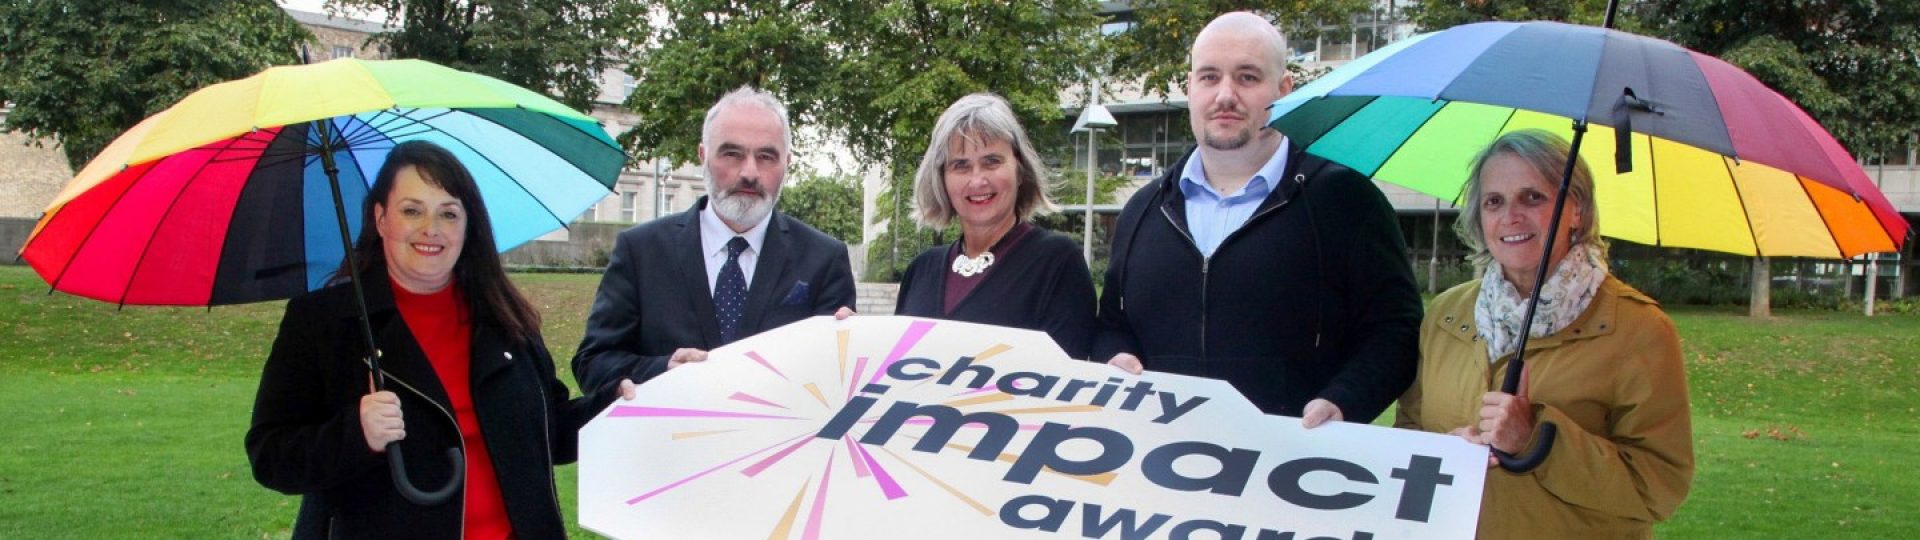 Charity Impact Awards Launch